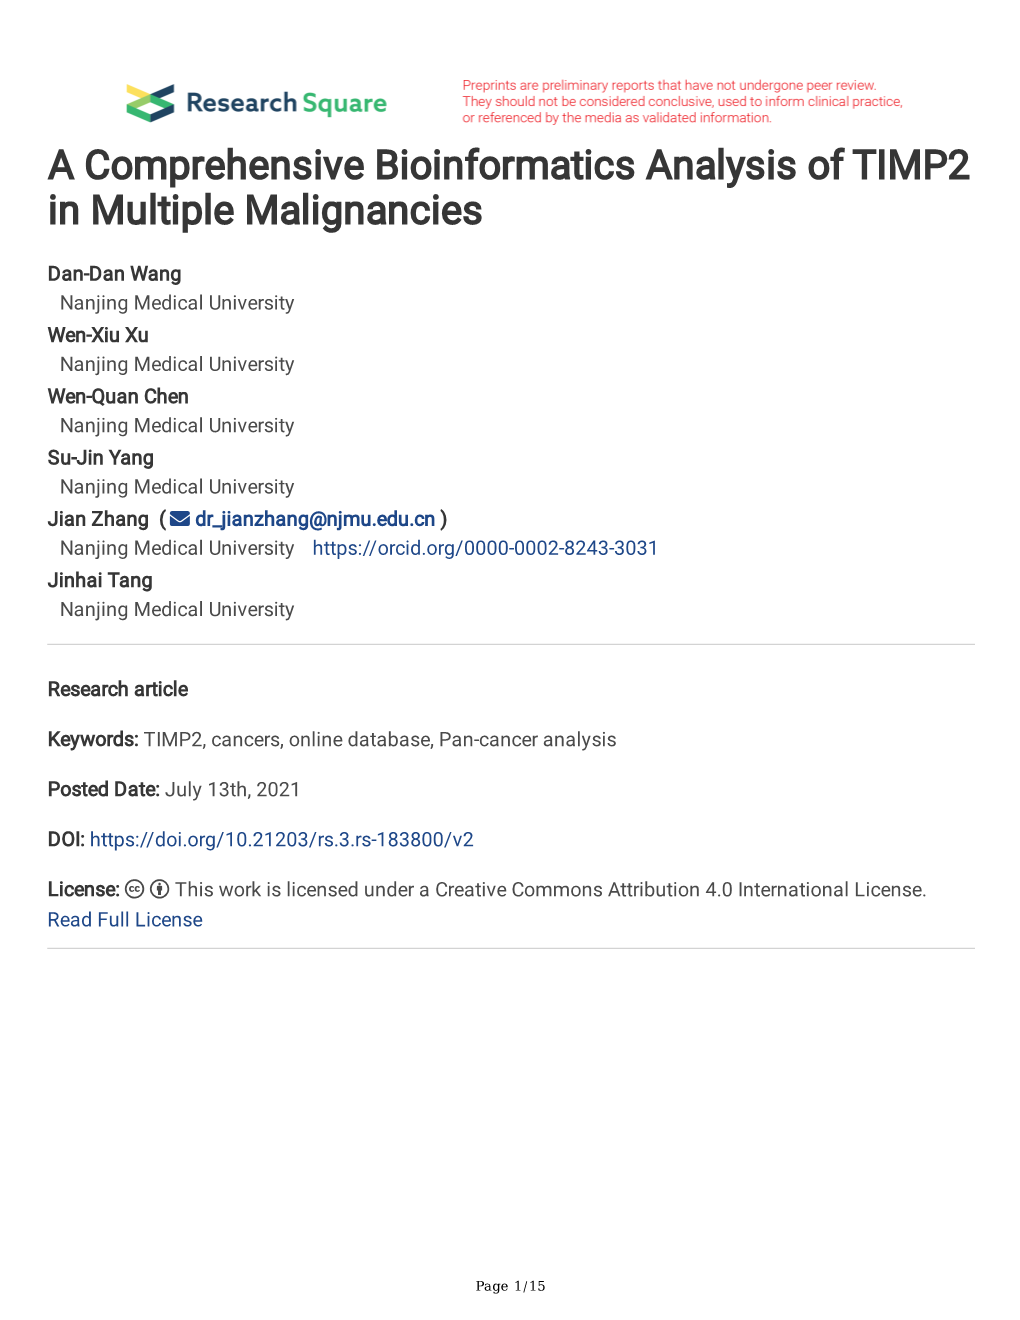 A Comprehensive Bioinformatics Analysis of TIMP2 in Multiple Malignancies